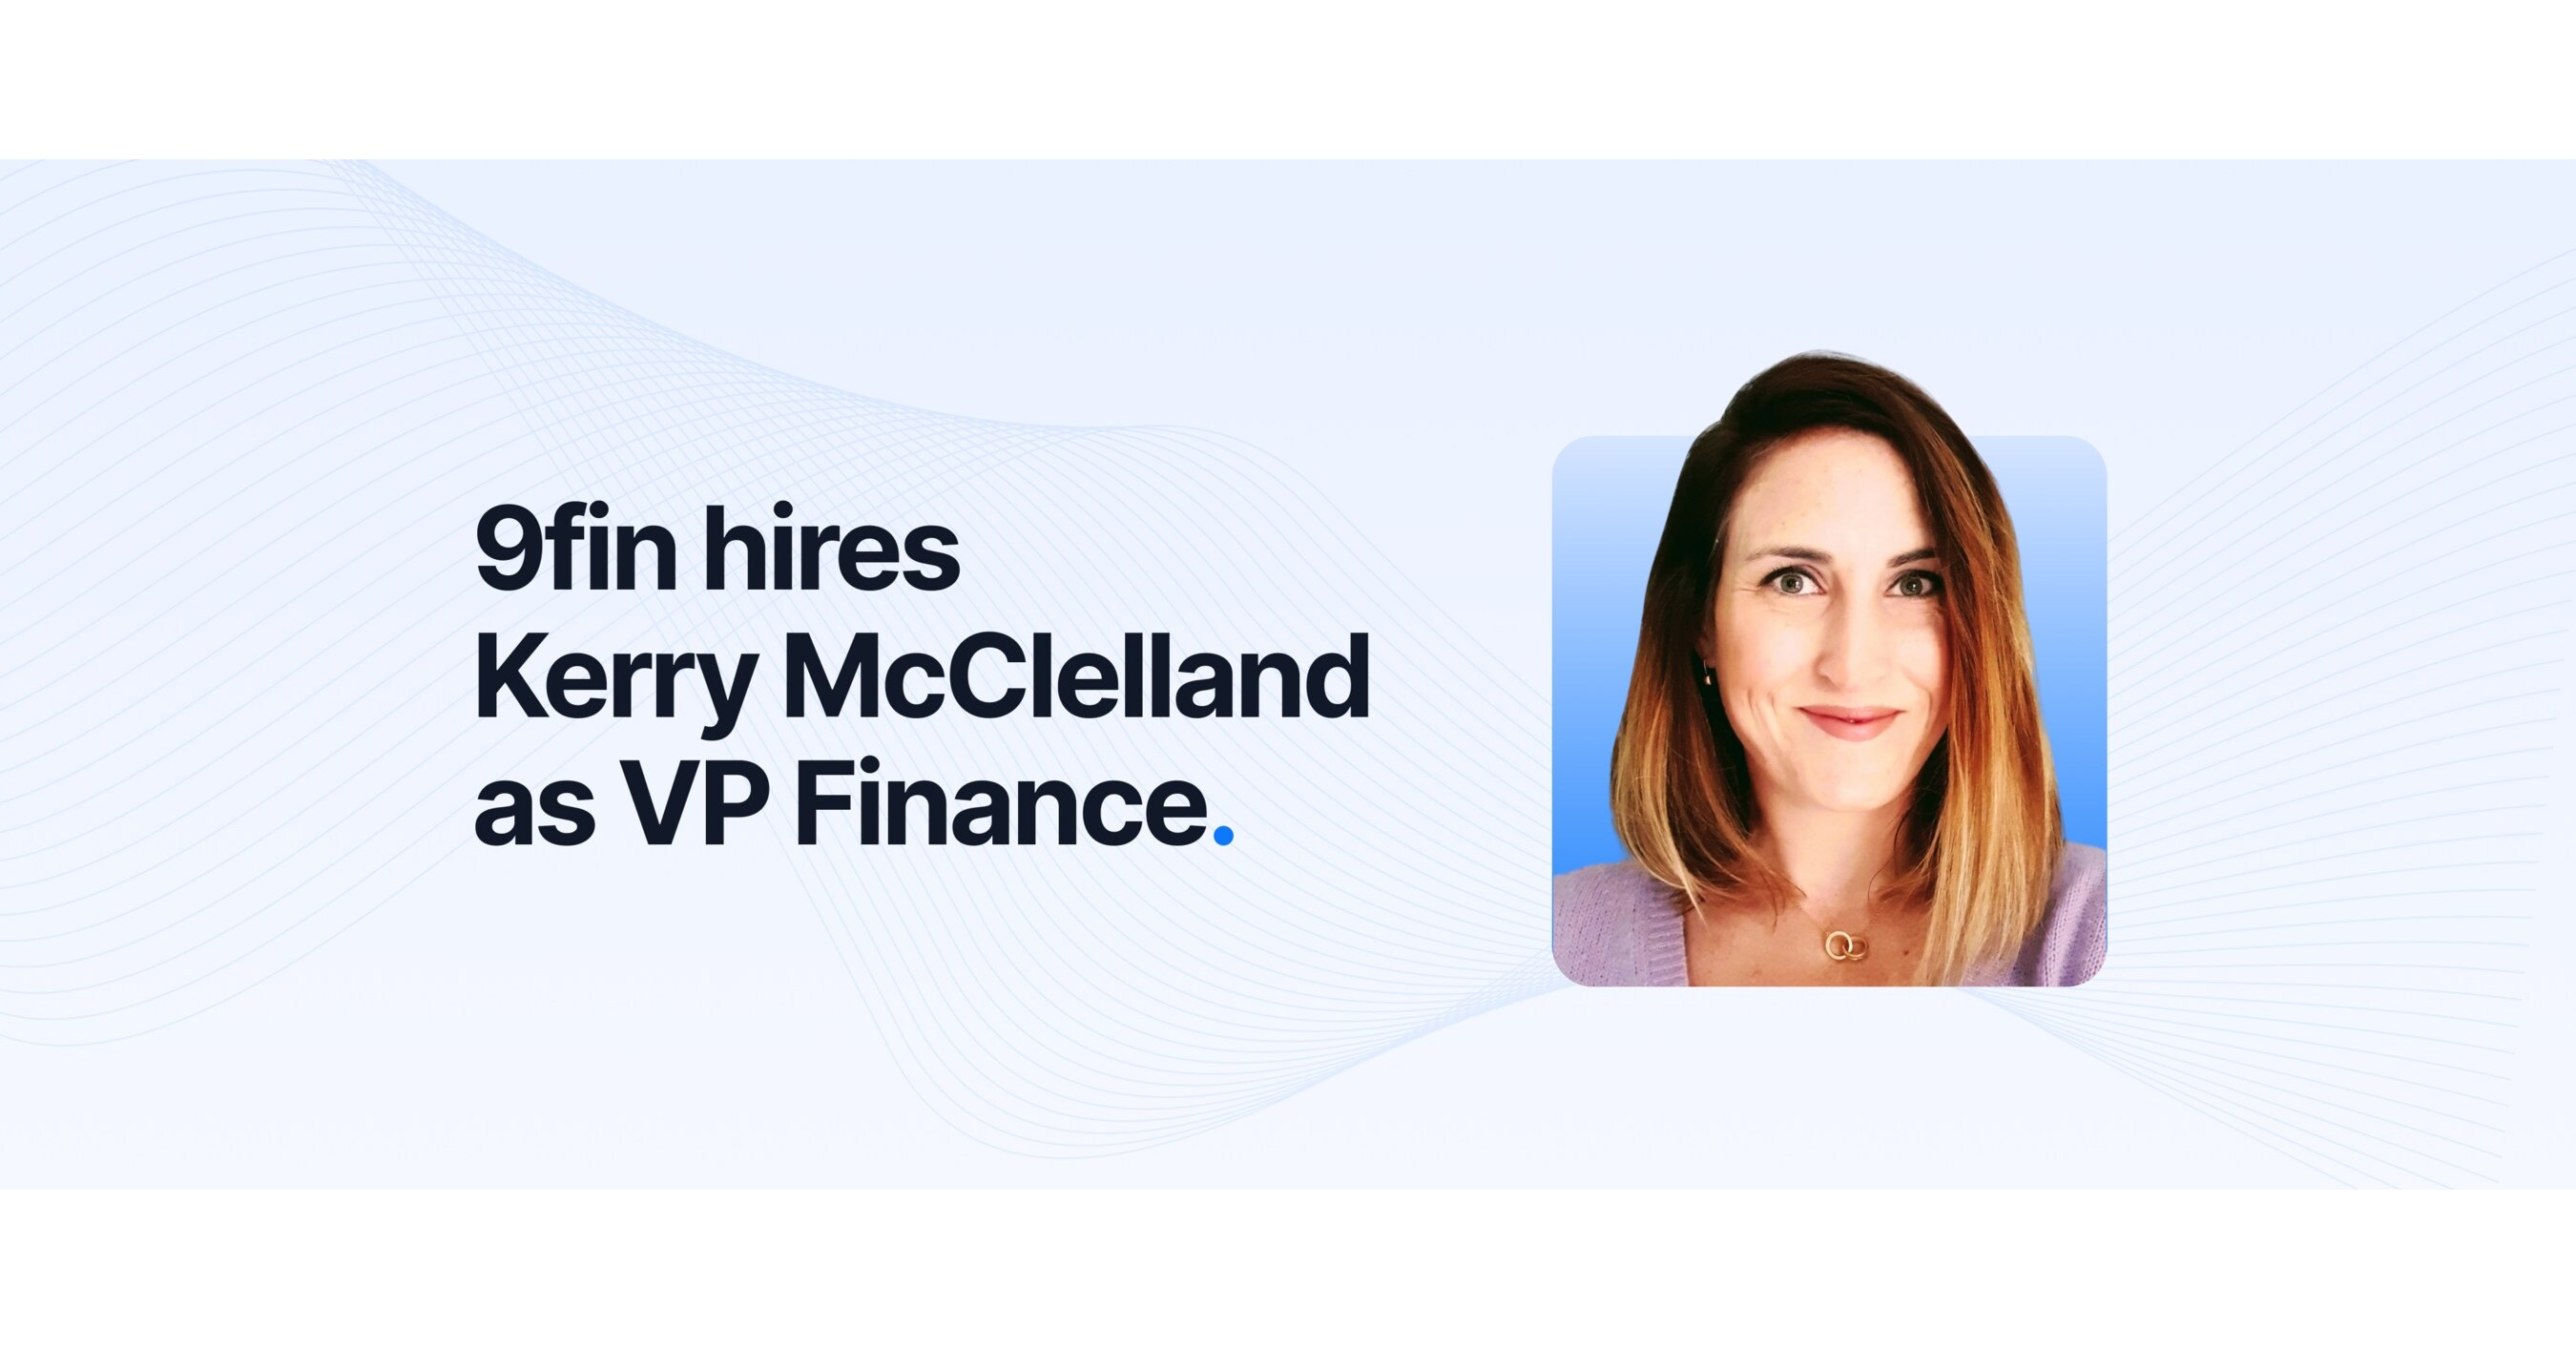 9fin hires Kerry McClelland as VP Finance